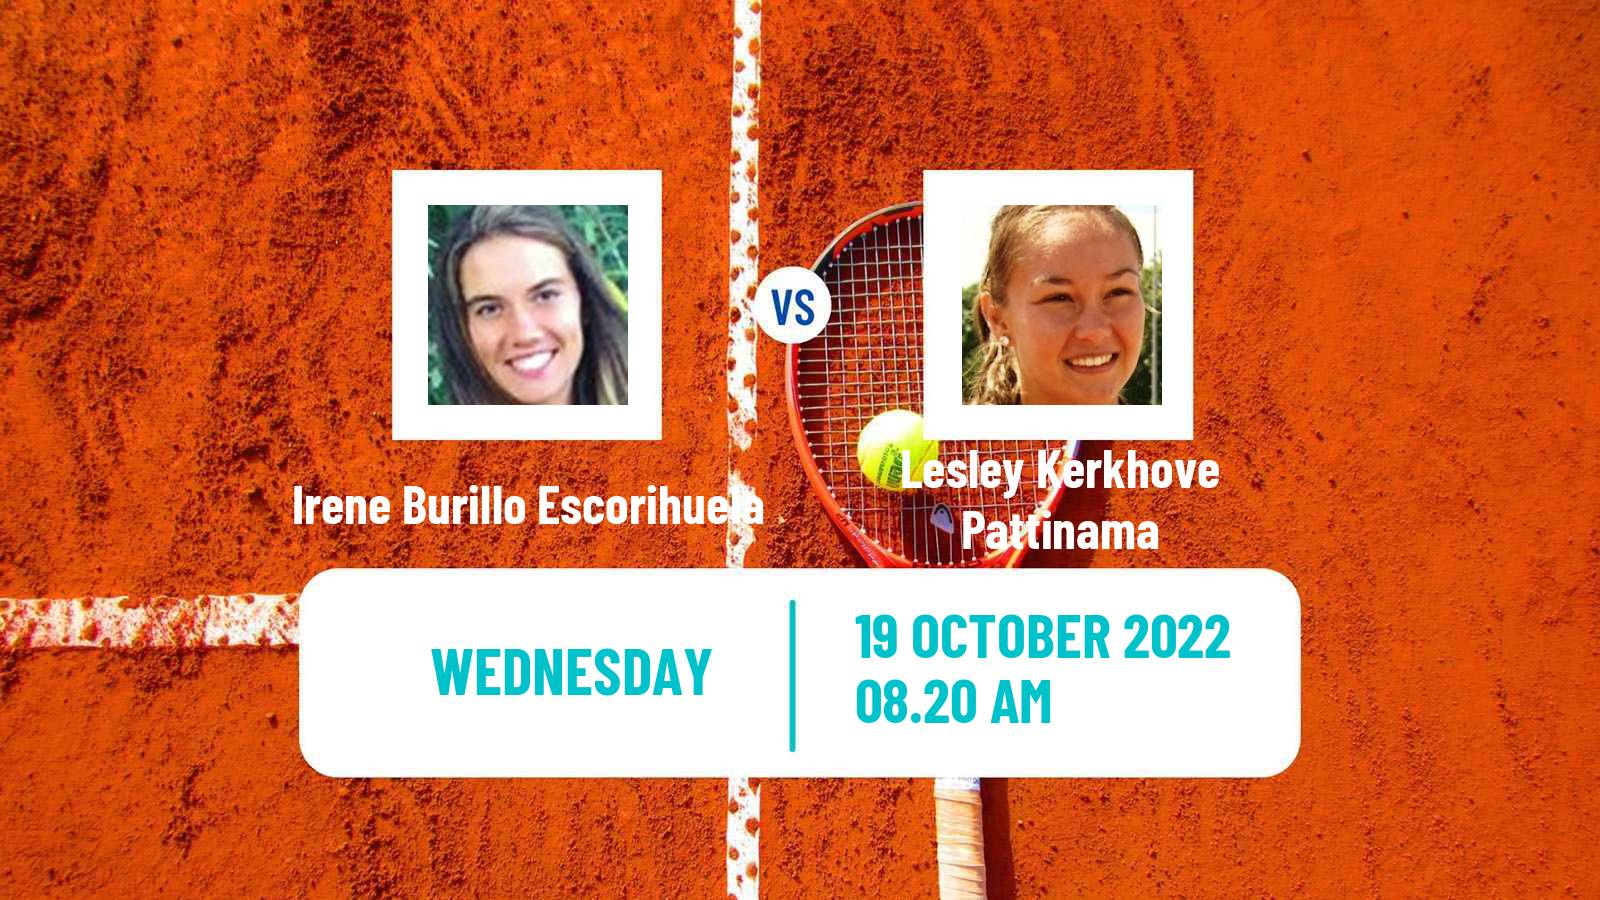 Tennis ITF Tournaments Irene Burillo Escorihuela - Lesley Kerkhove Pattinama